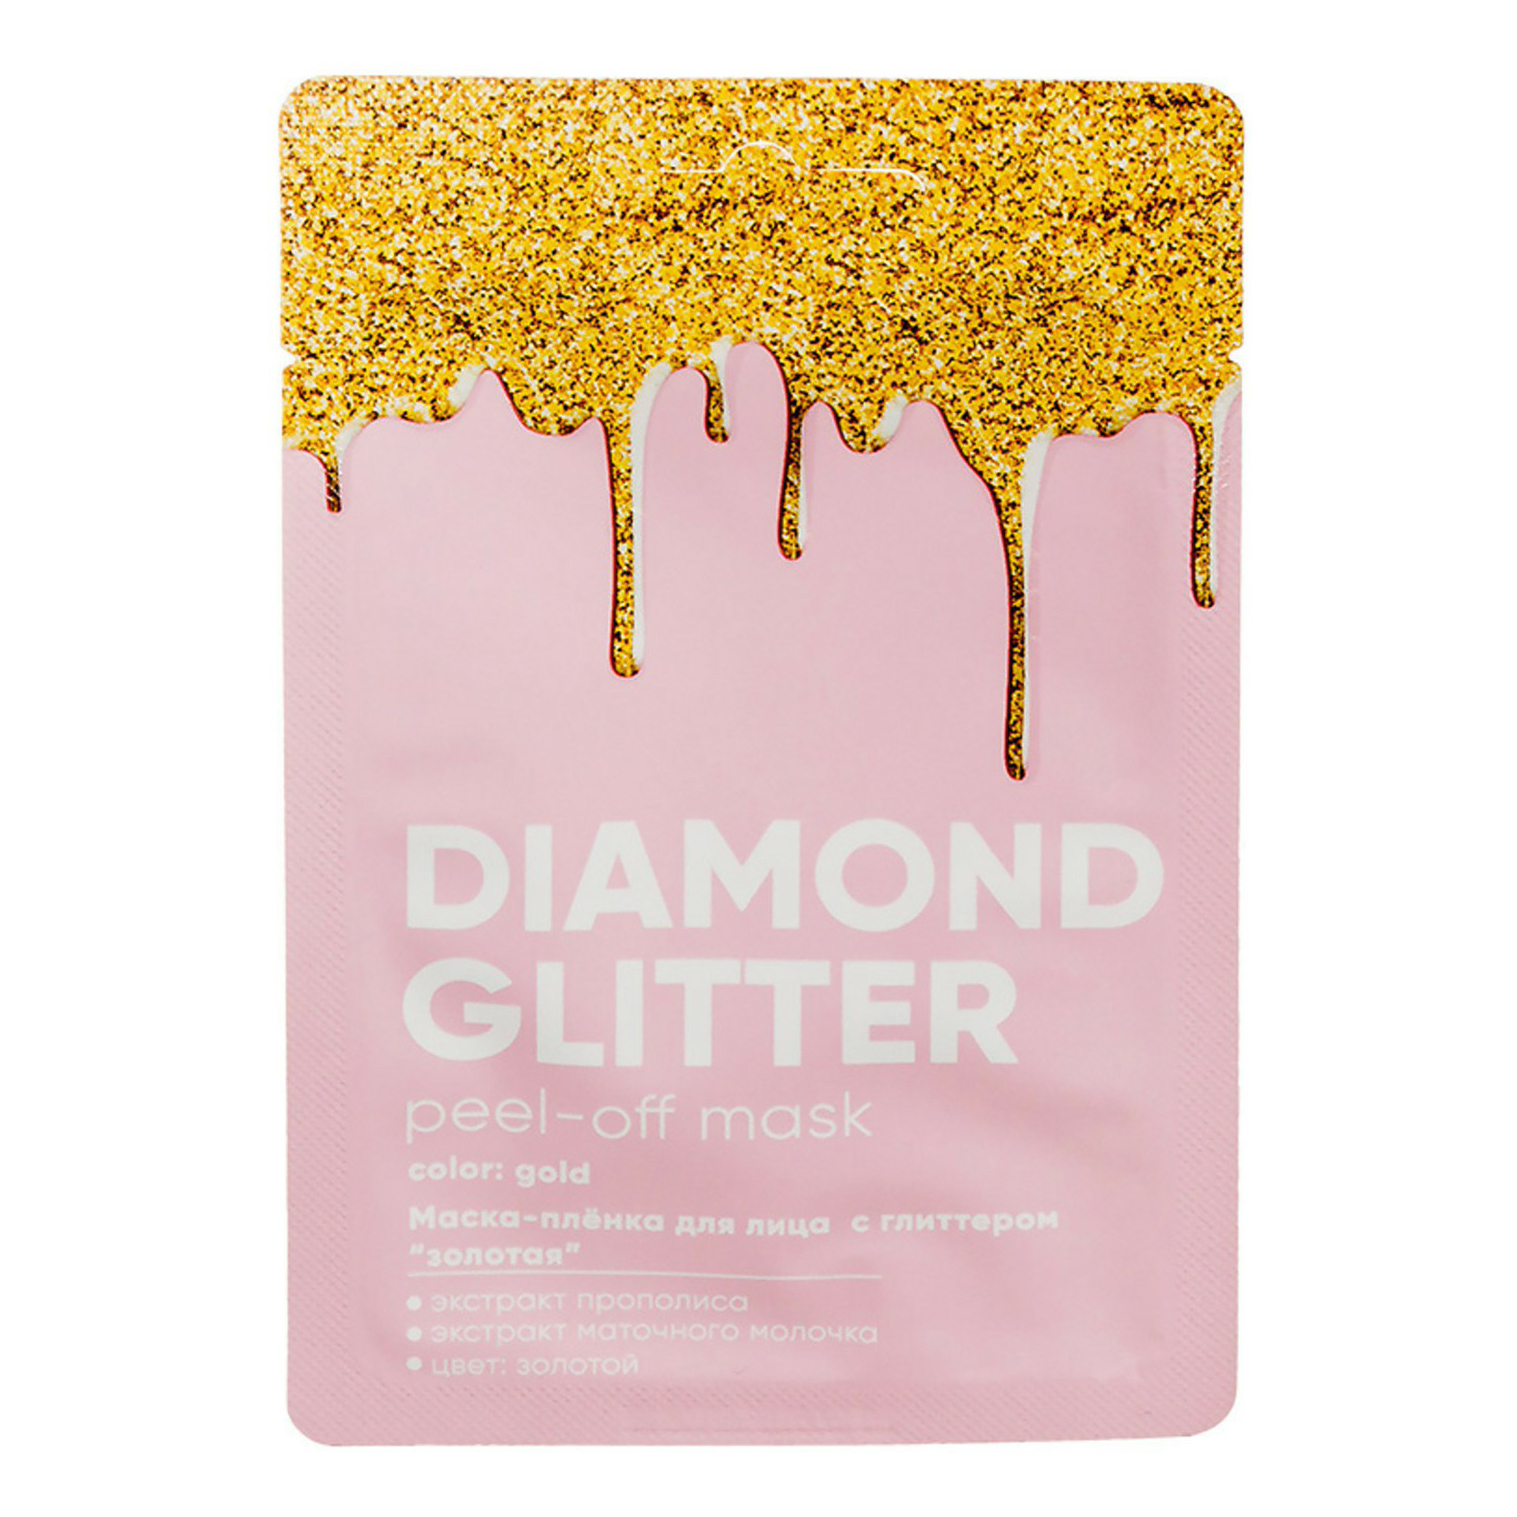 Маска-пленка для лица ЛЭтуаль Funky Fun Diamond glitter с глиттером золотая 10 г